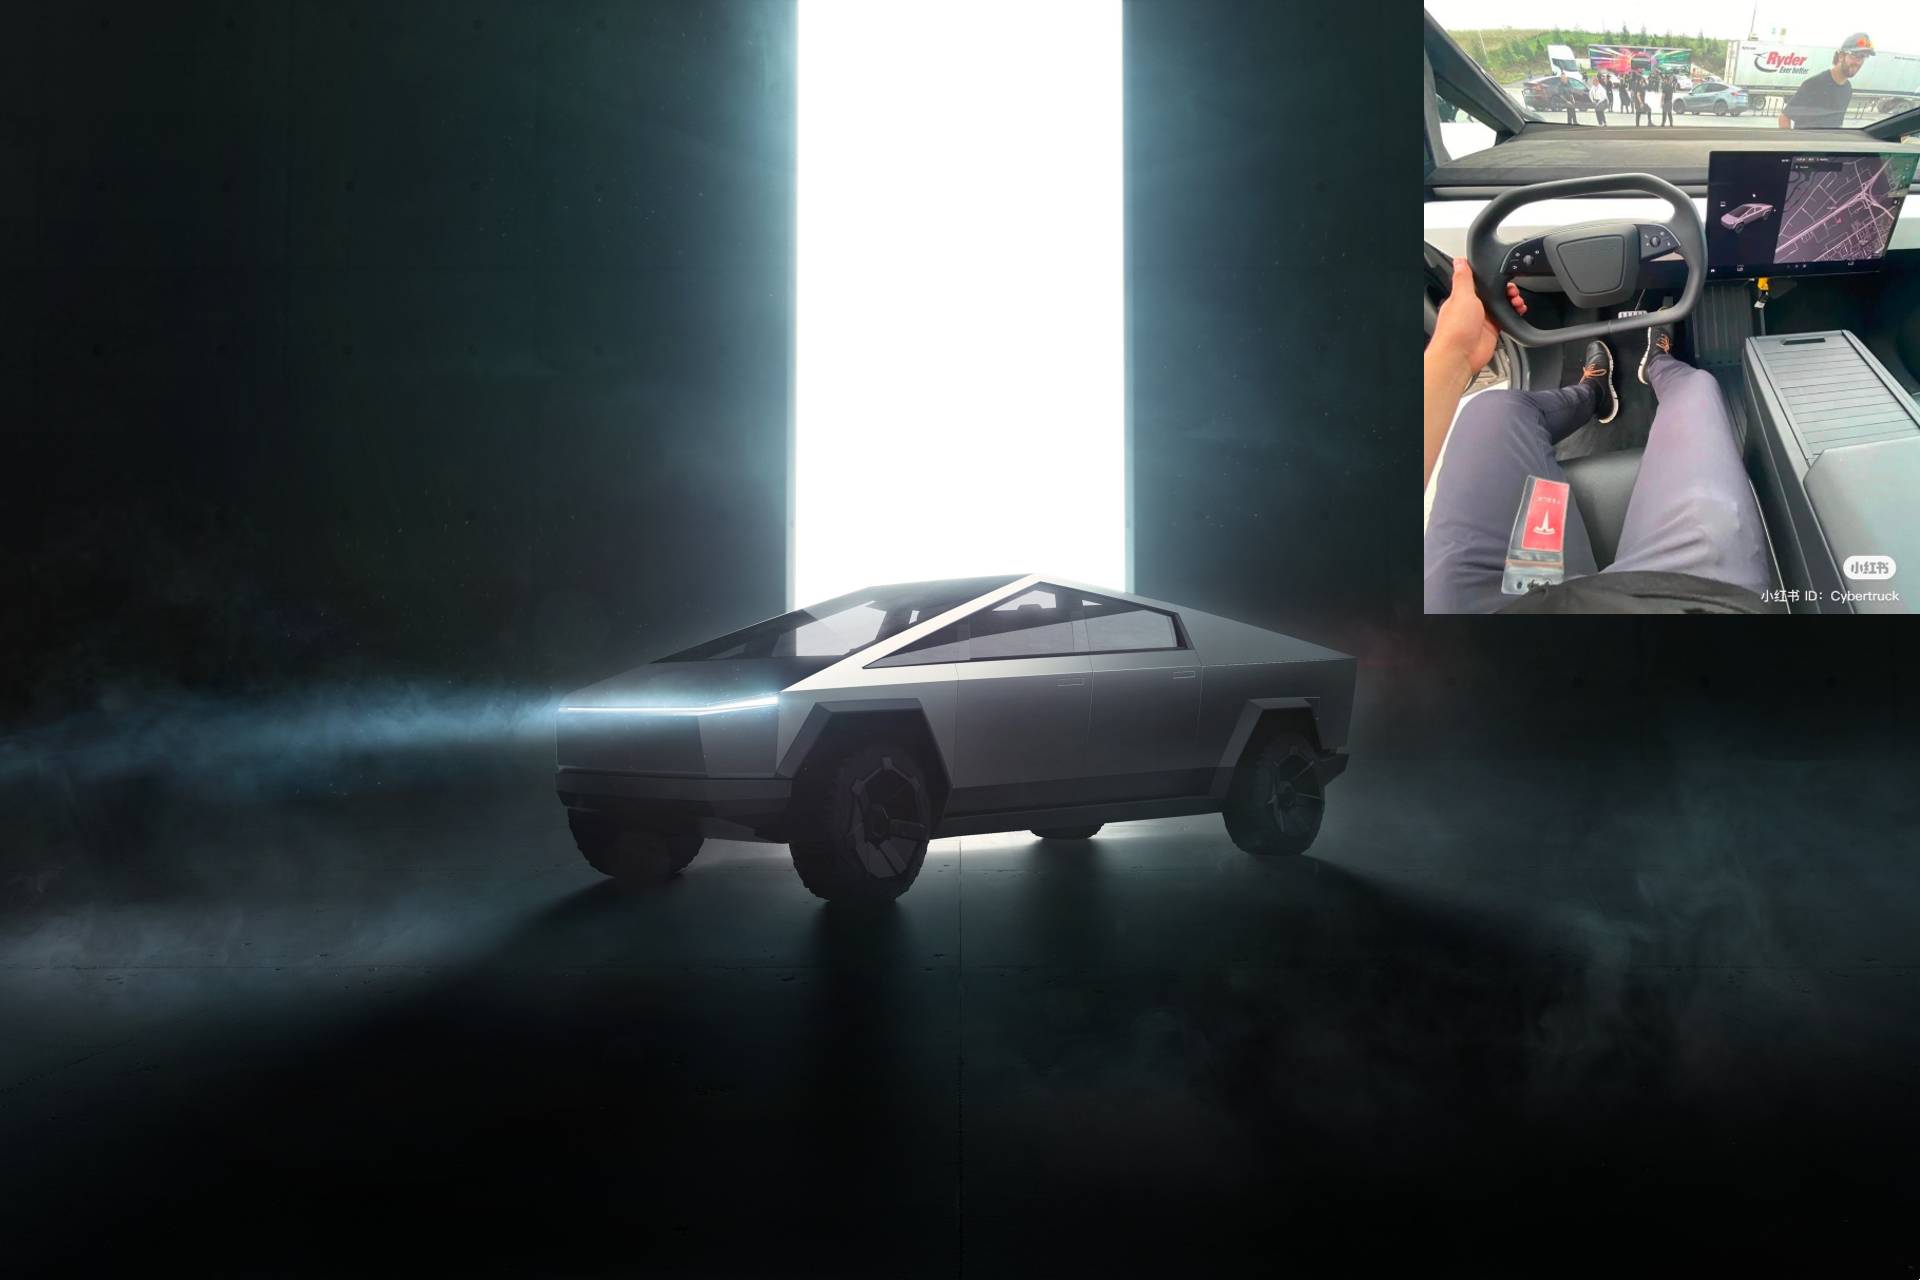 Tesla Cybertruck interior photo shows improved yoke